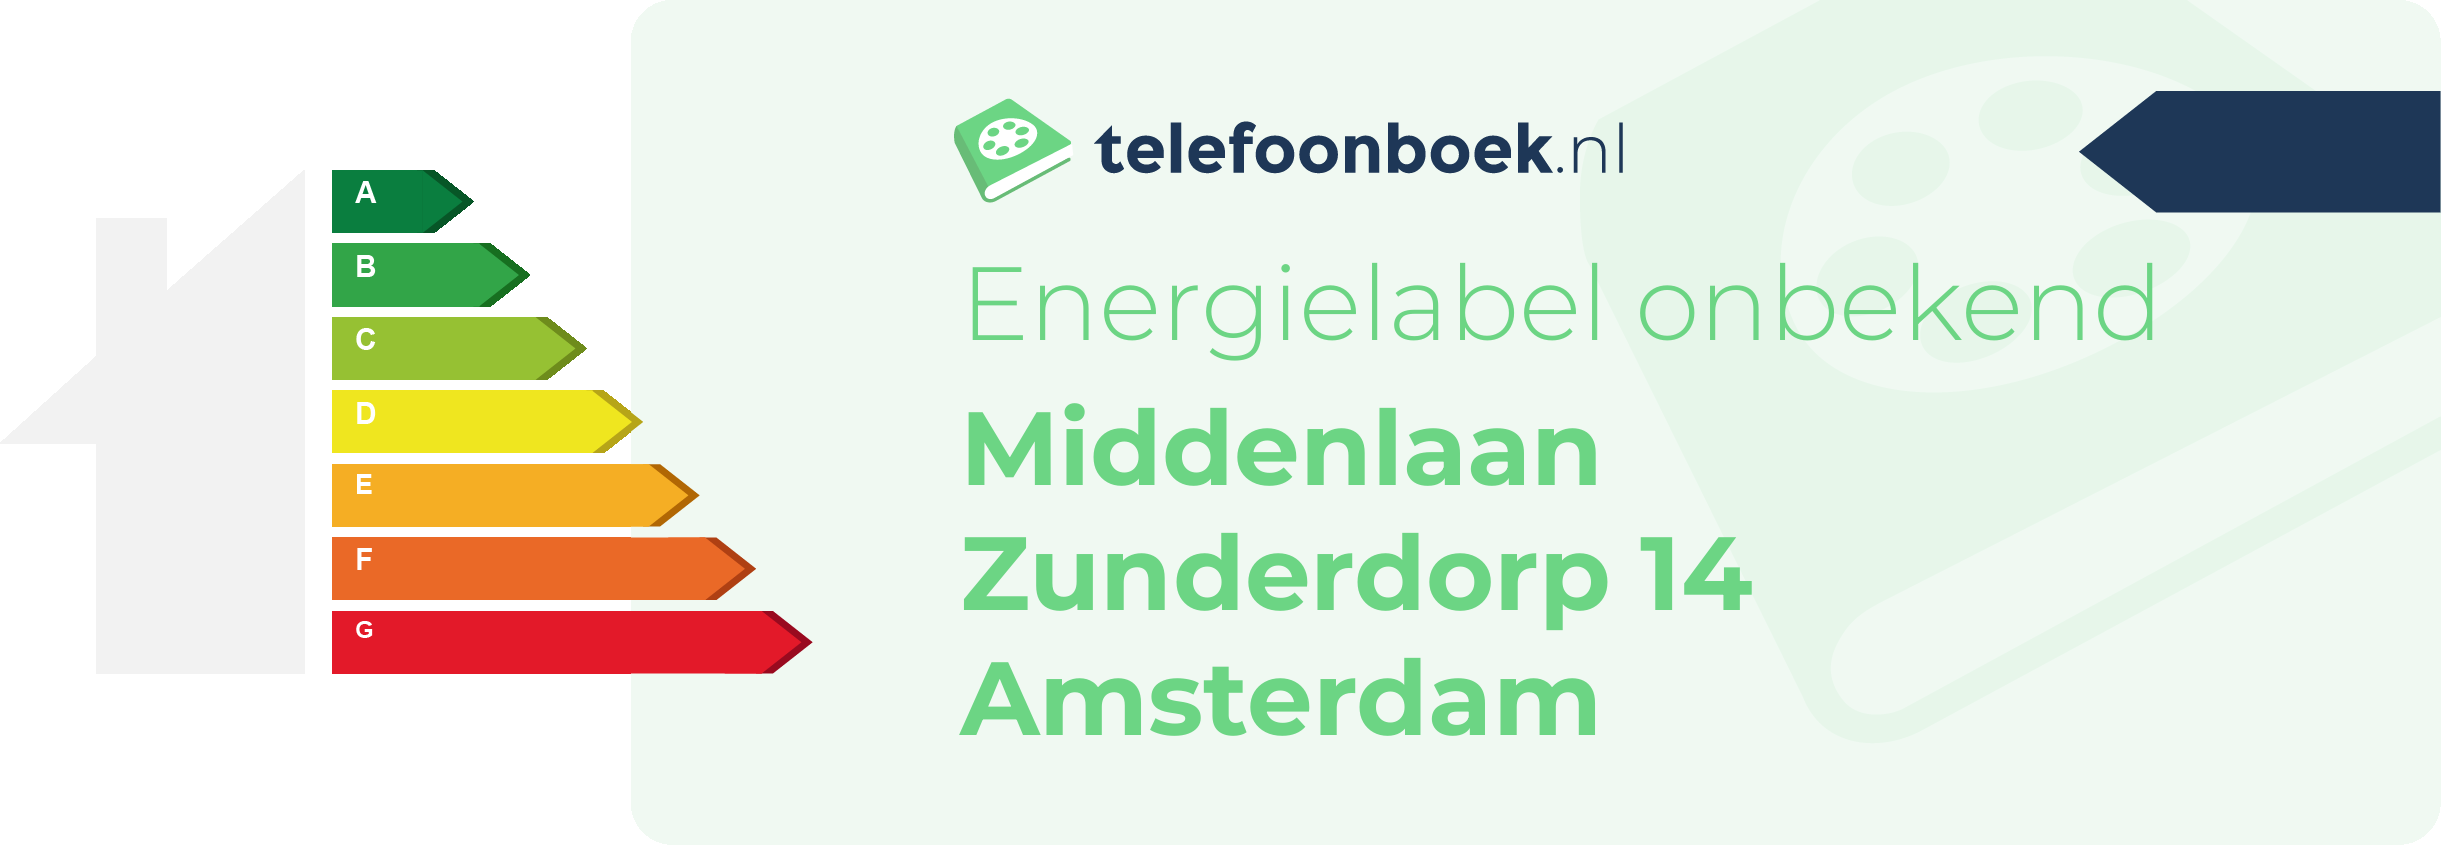 Energielabel Middenlaan Zunderdorp 14 Amsterdam